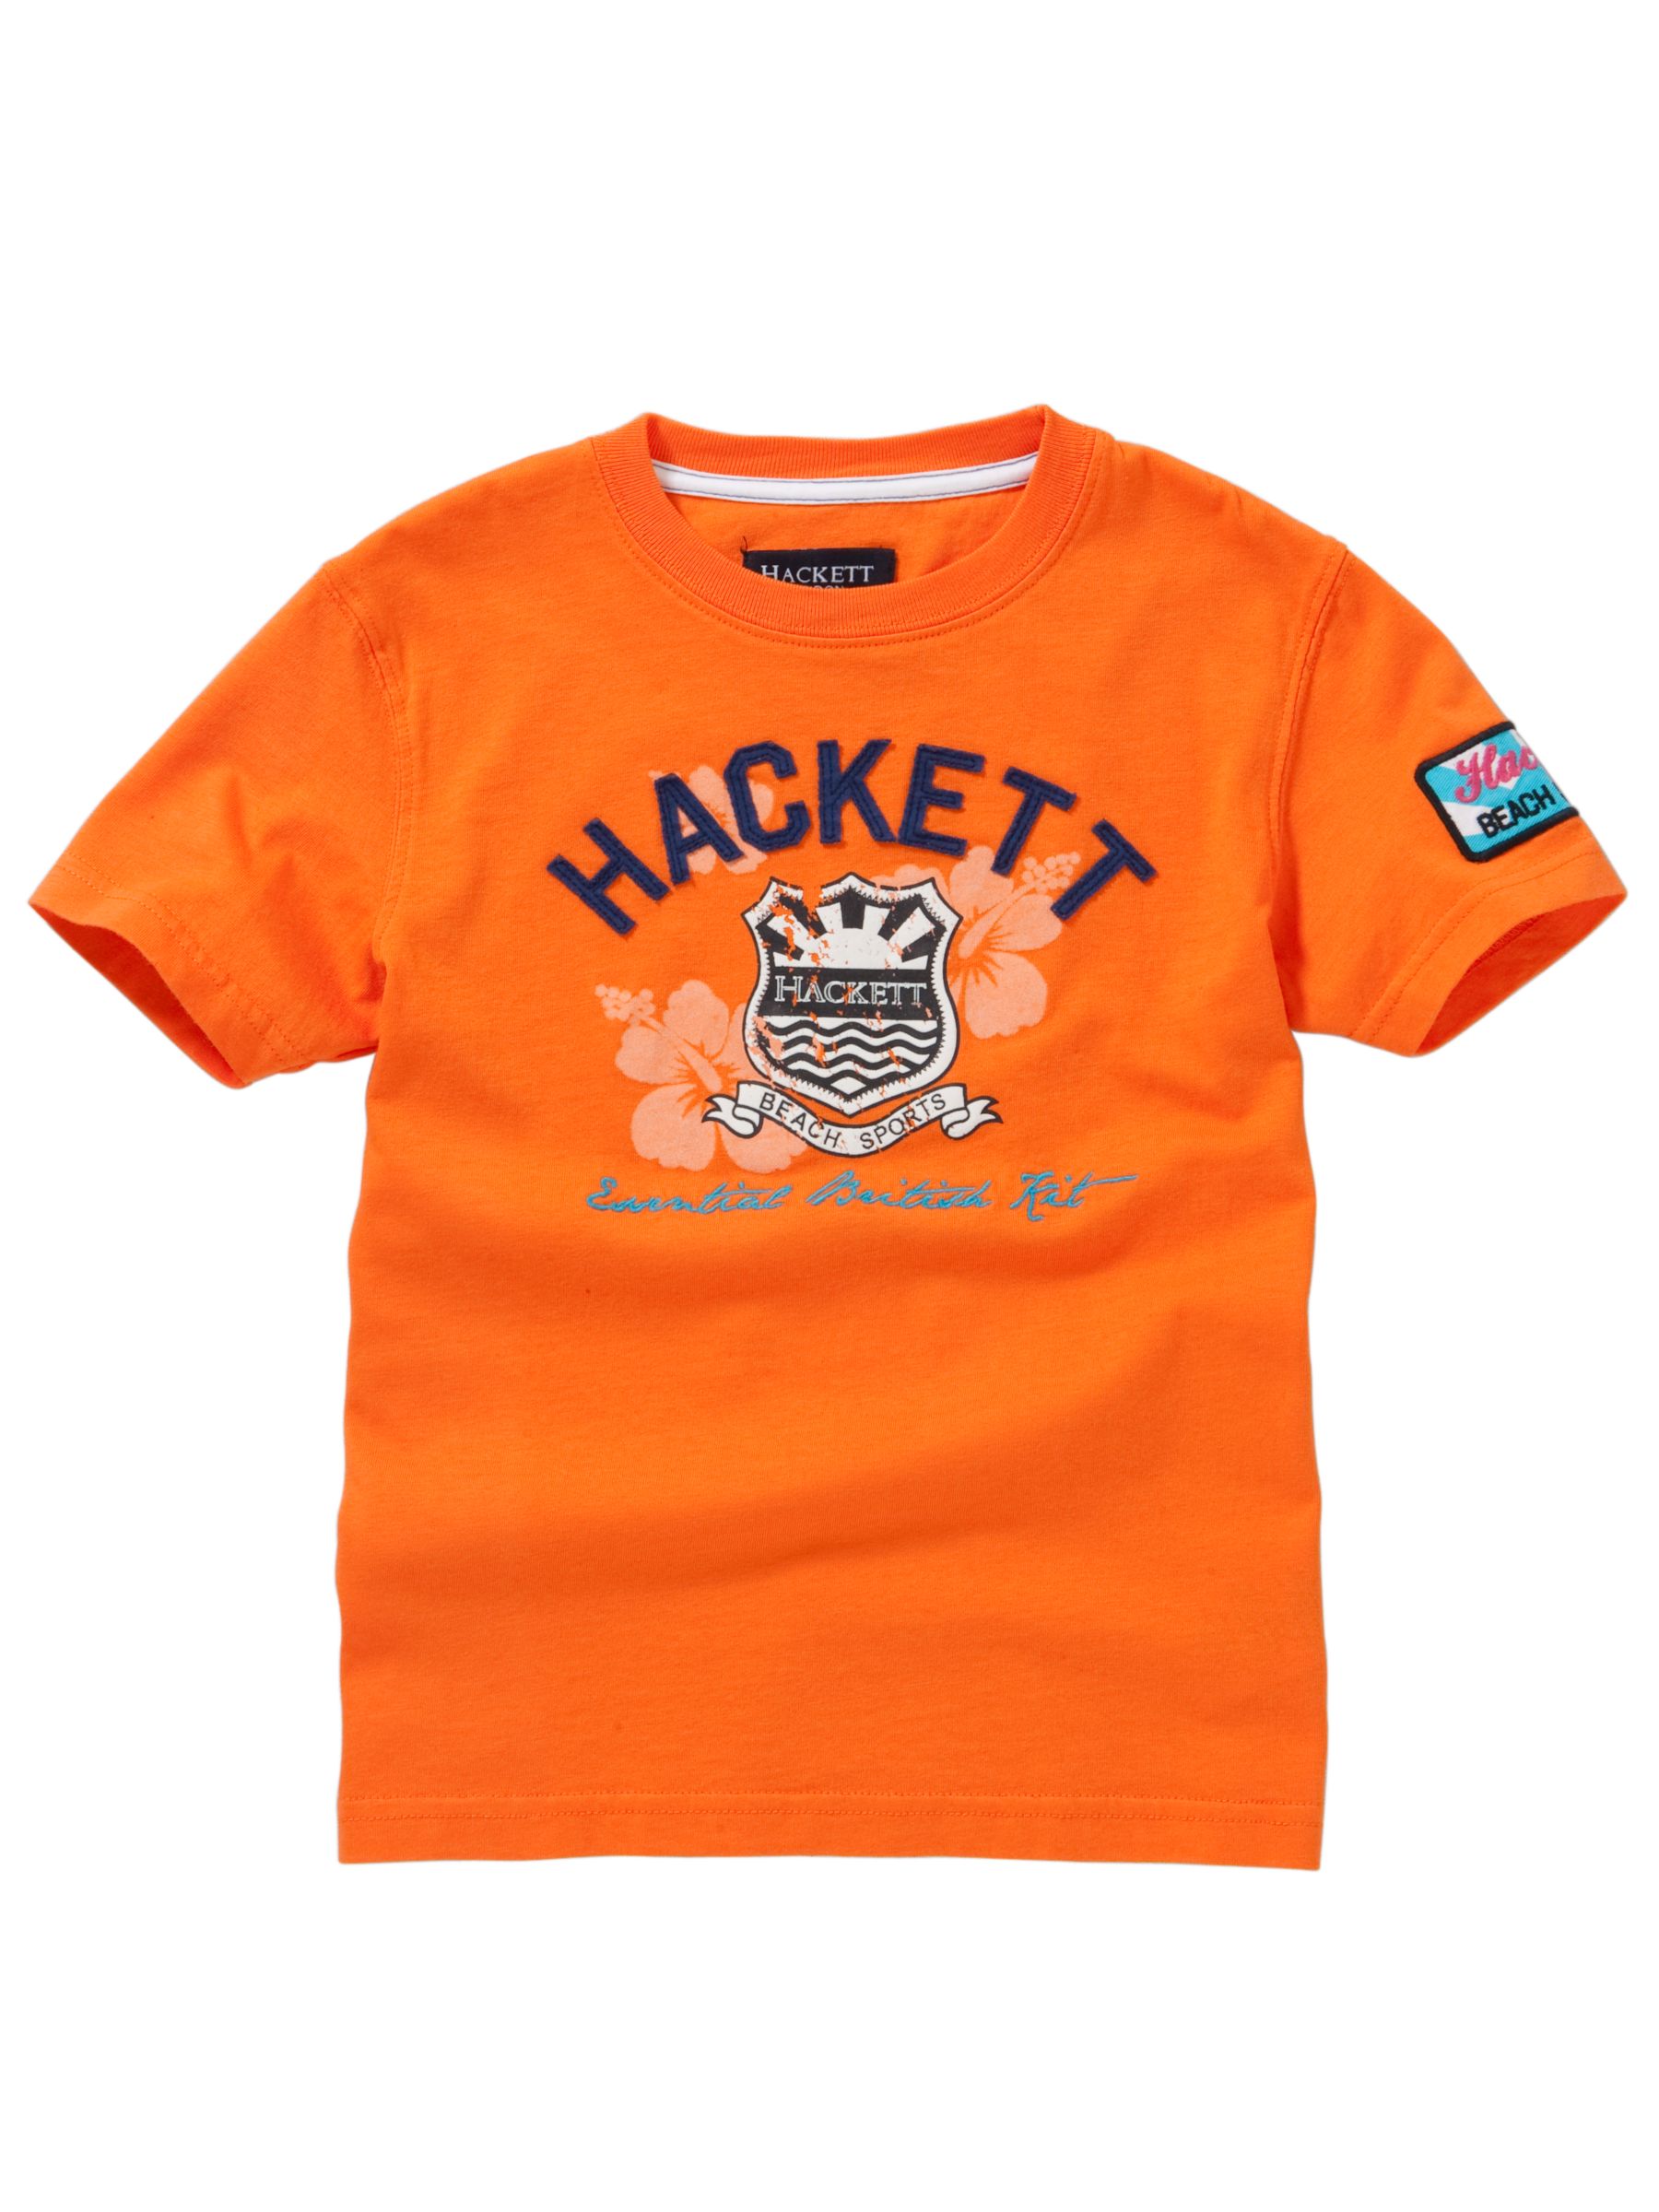 Hackett London Beach T-Shirt, Orange